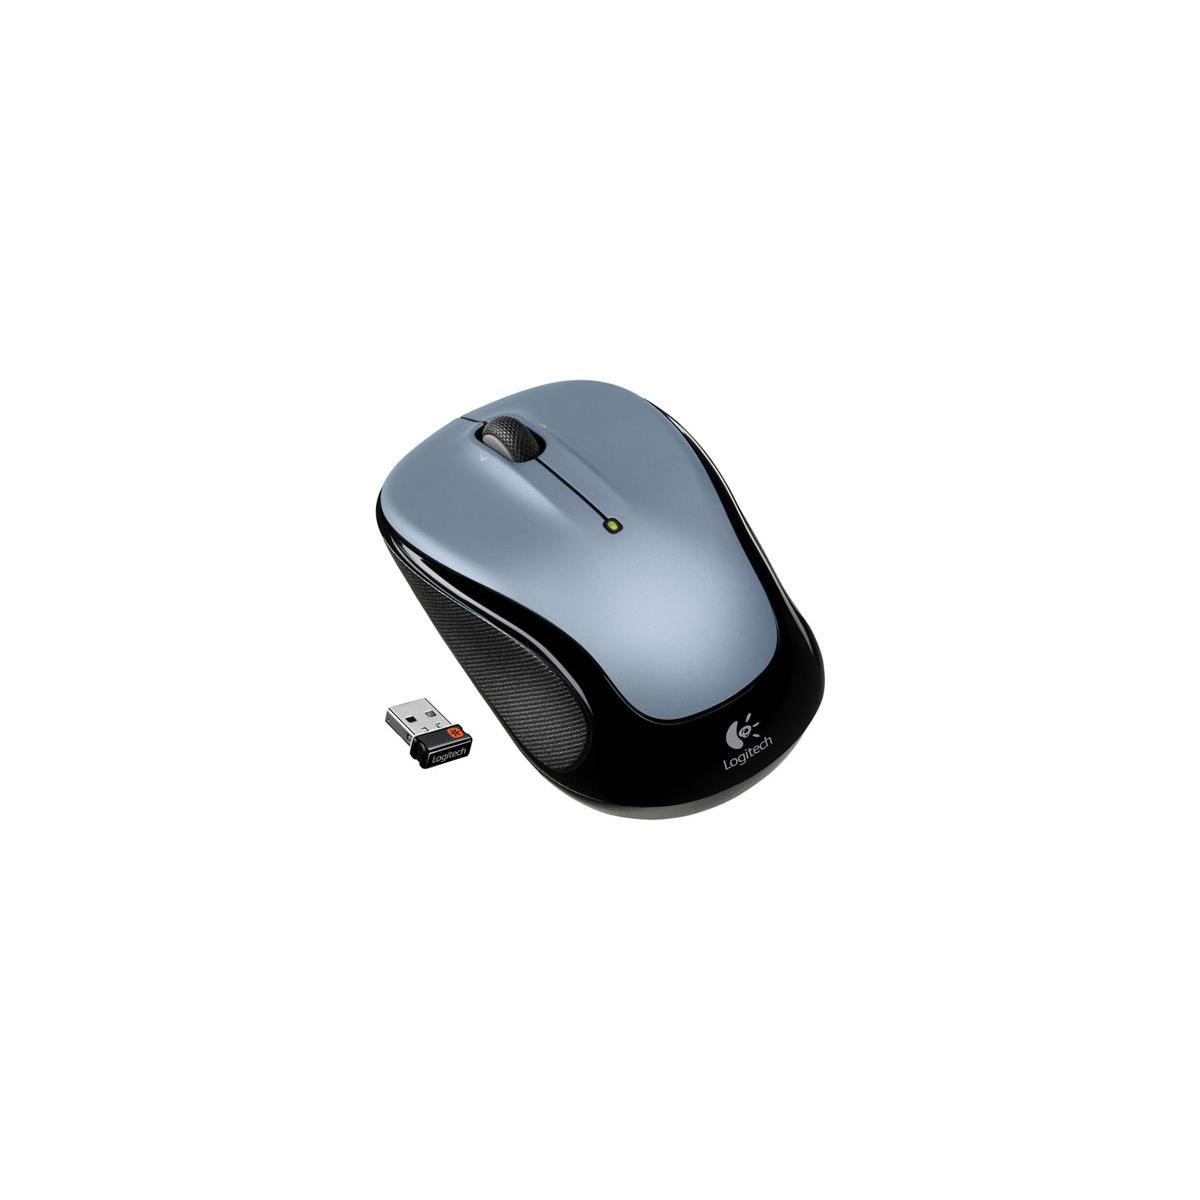 Wireless Mouse, Light Silver #910-002332 | eBay